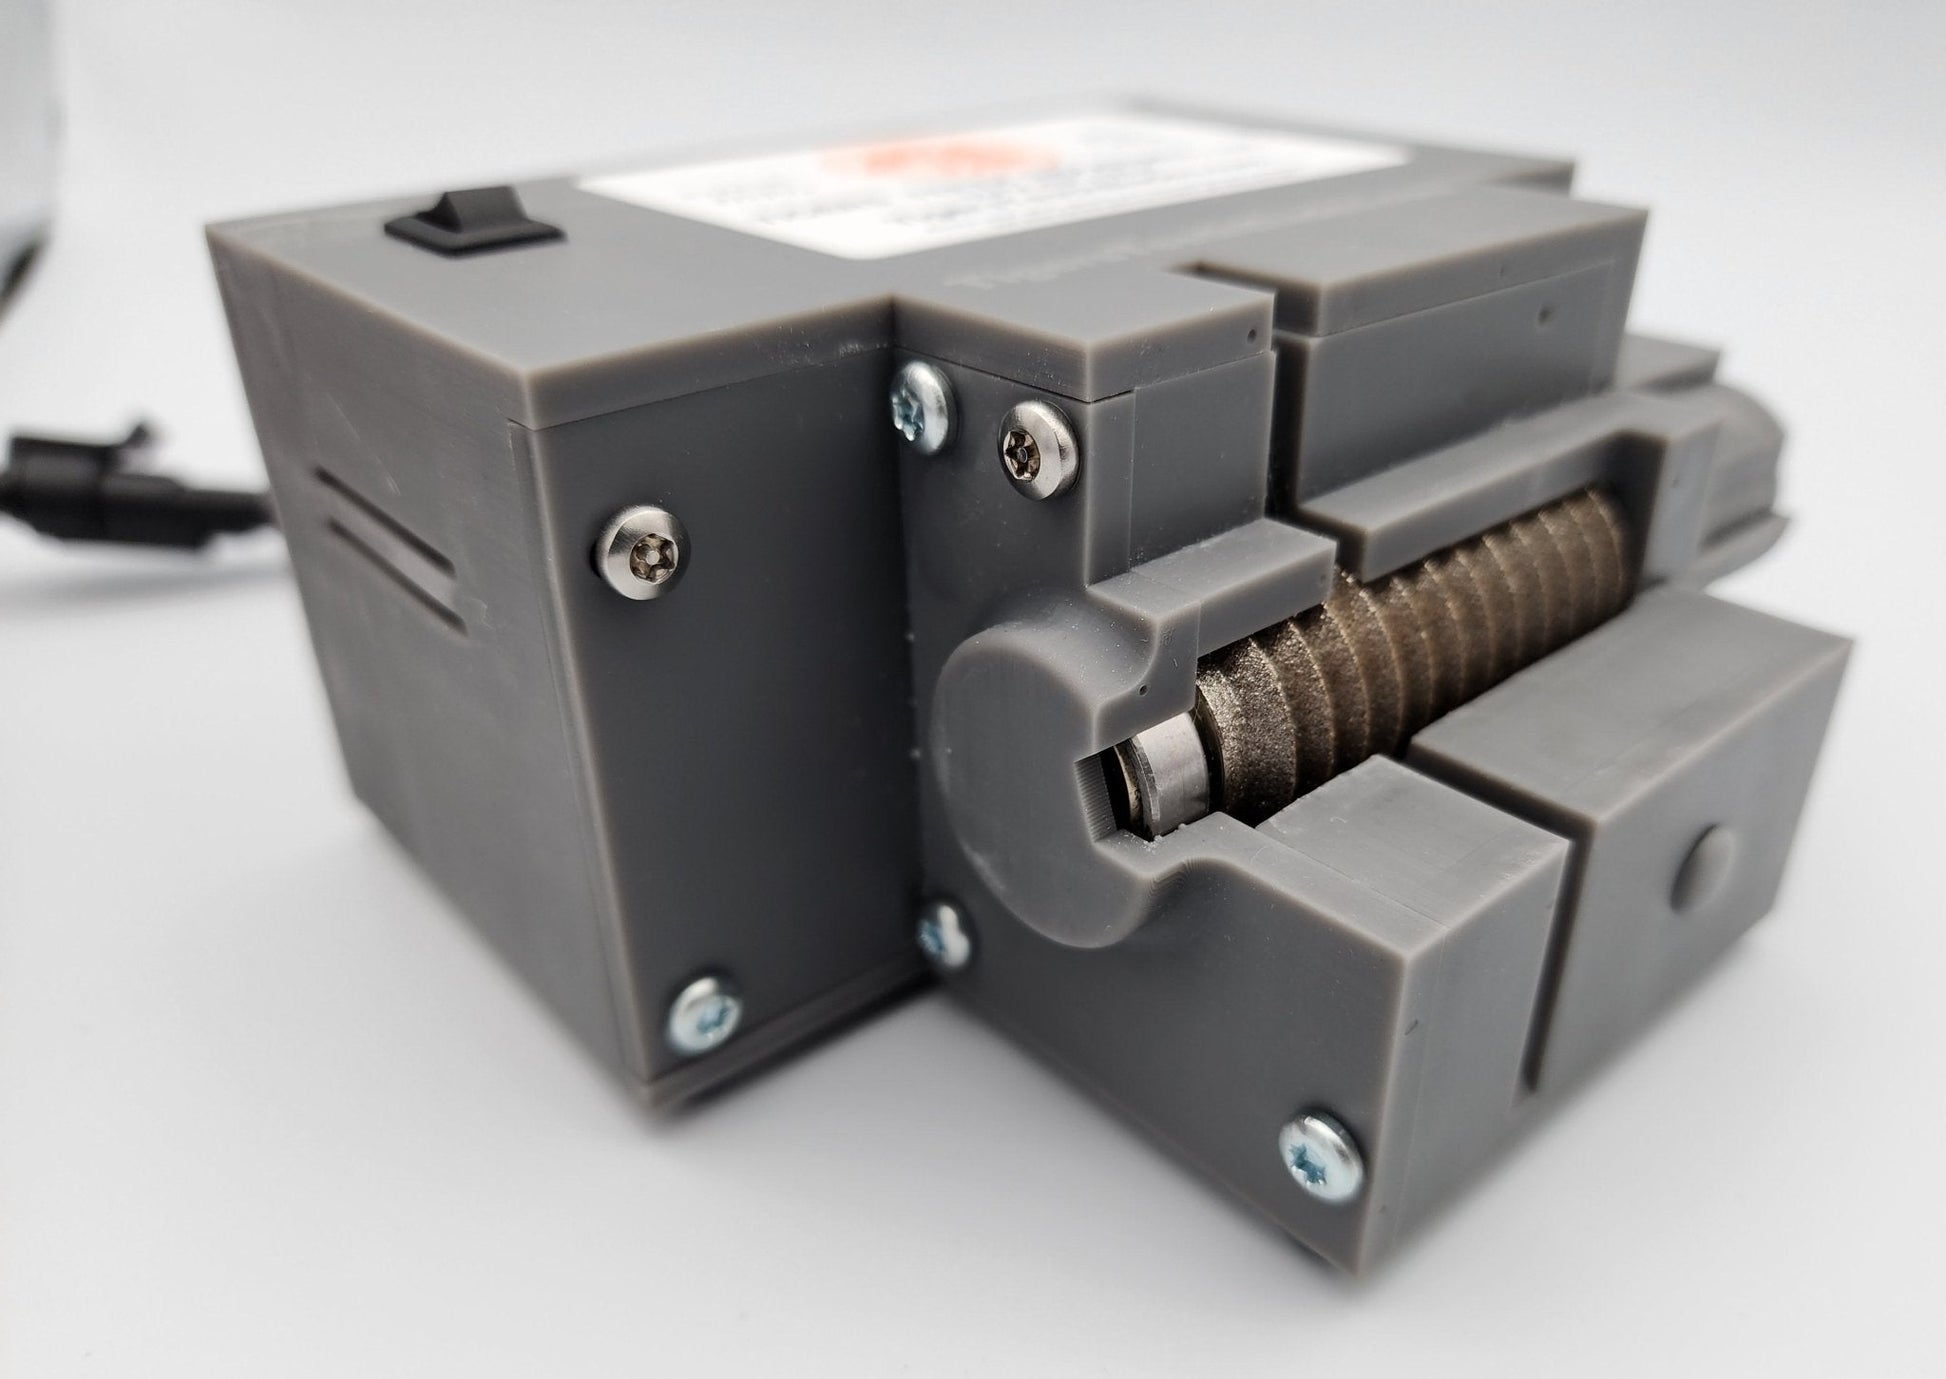 Oscillating Multi-Tool Blade Sharpener for Carbide Blades – Tigers